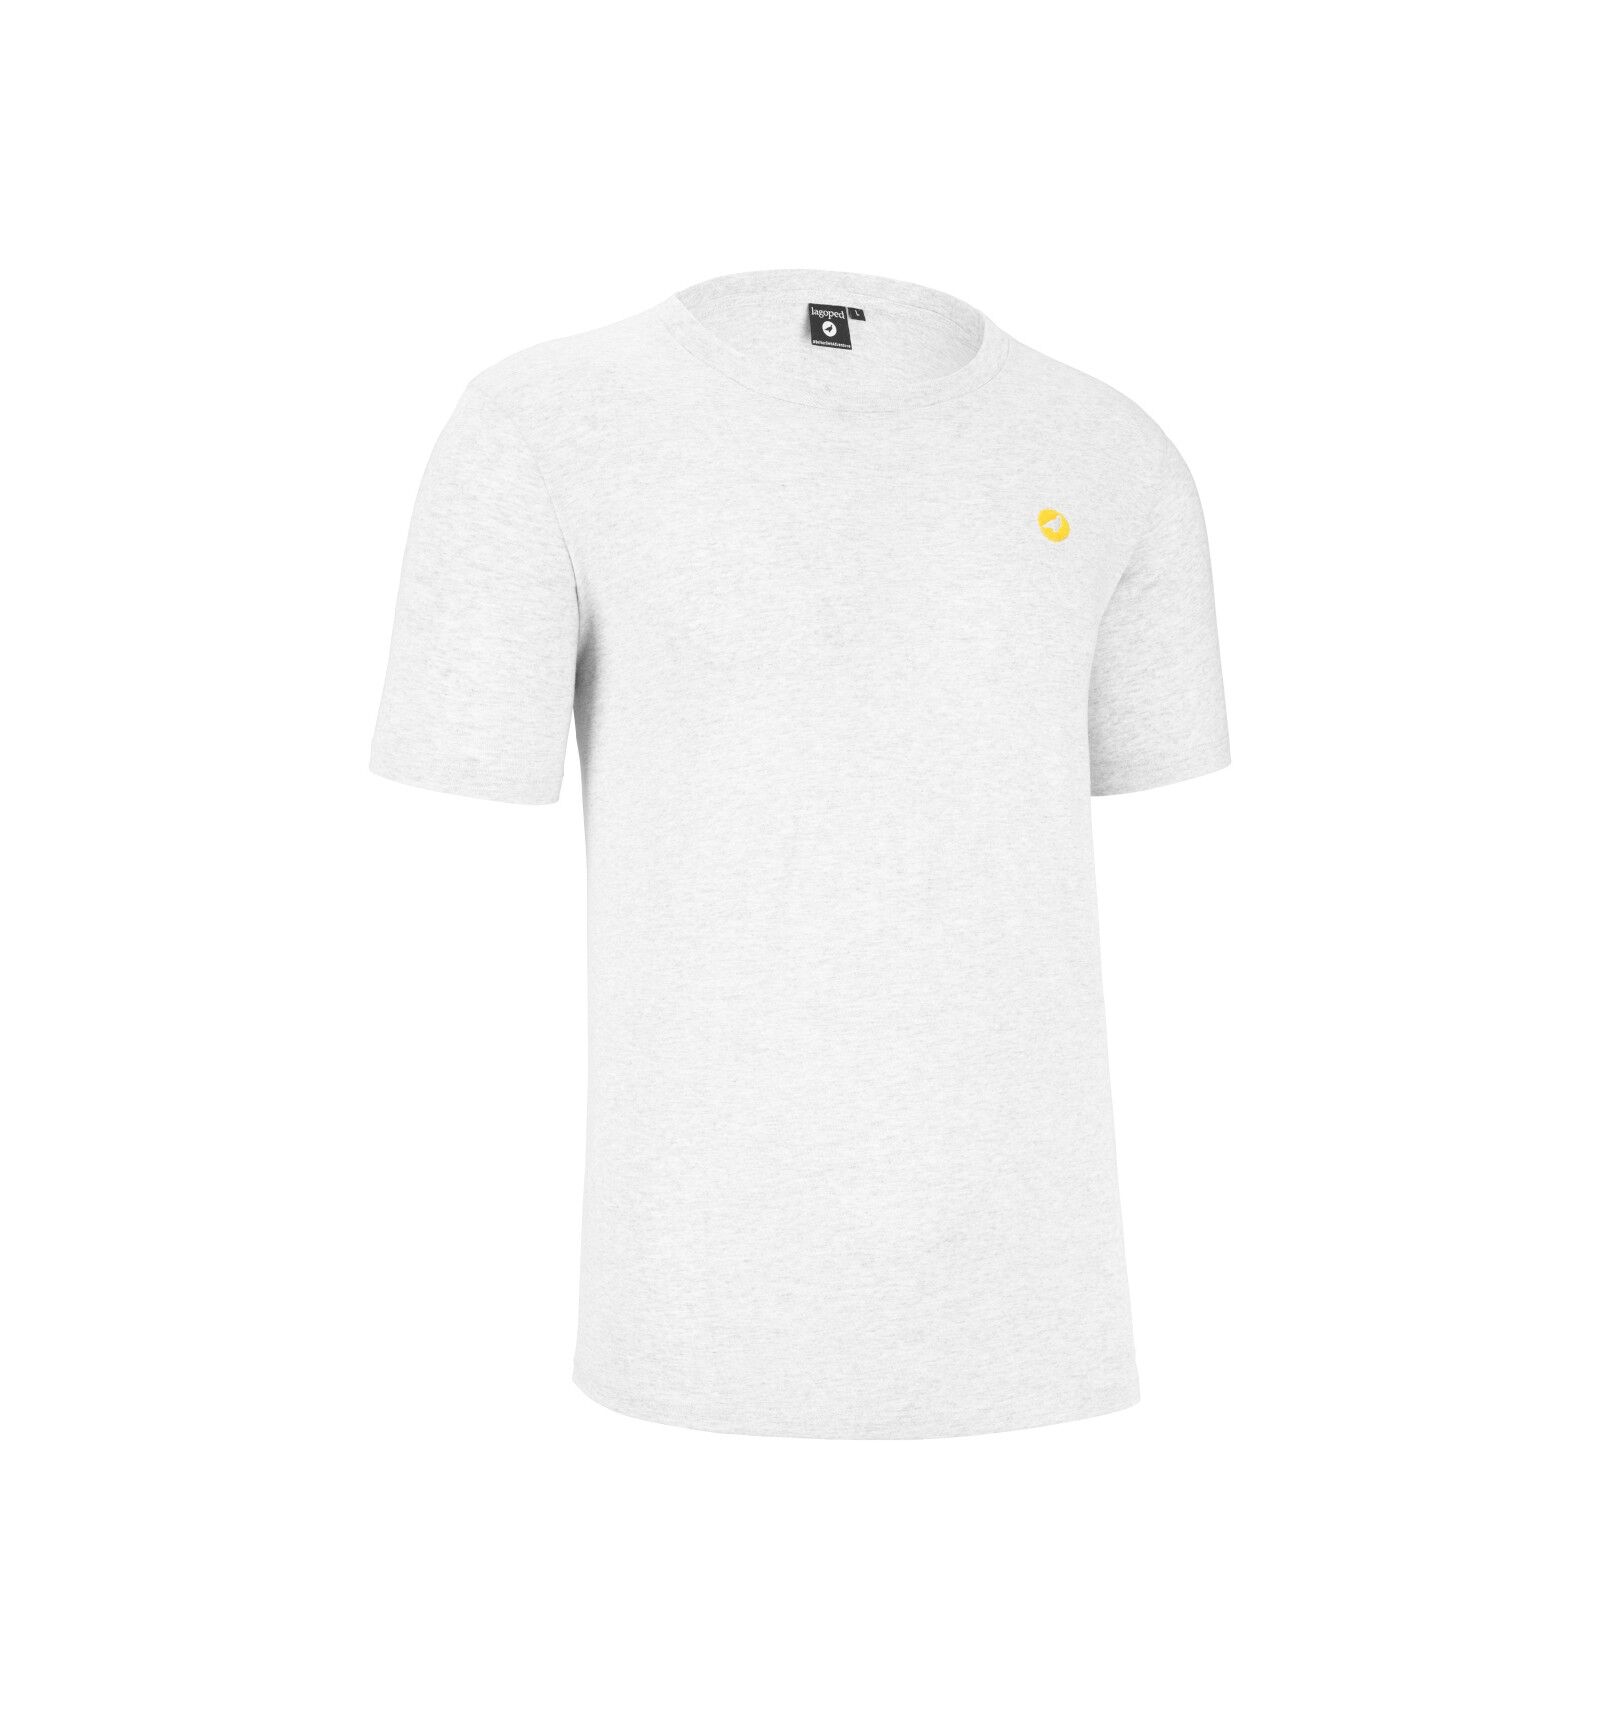 Lagoped Teerec - T-shirt - Men's